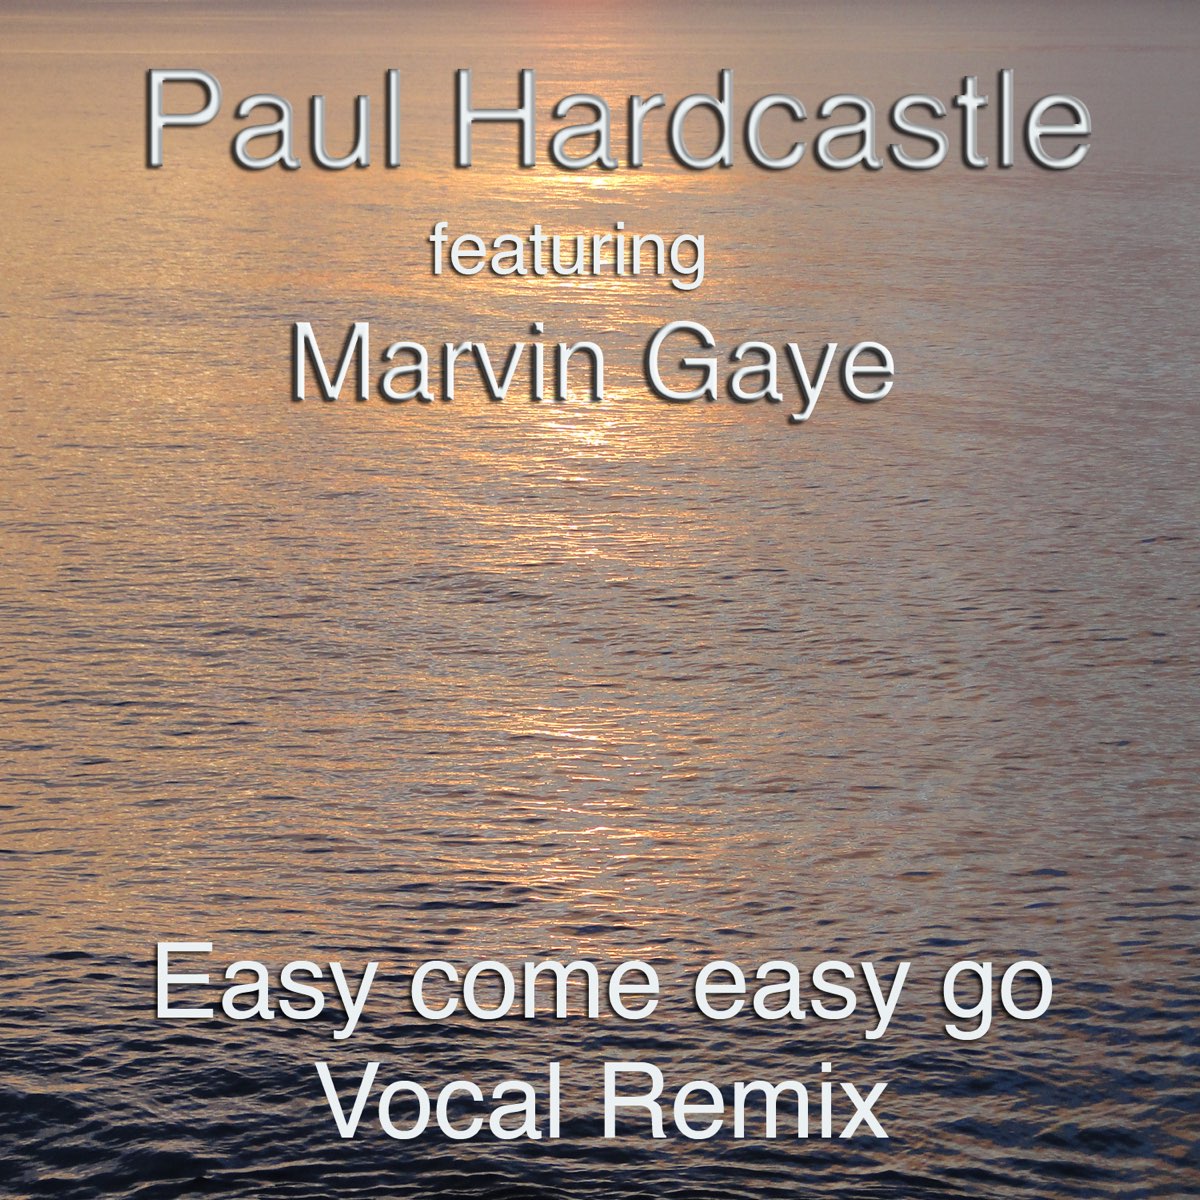 Easy coming easy coming песня. Paul Hardcastle - easy come easy go. Paul Hardcastle фото. Easy come easy go Remix. Paul Hardcastle фото альбомов.